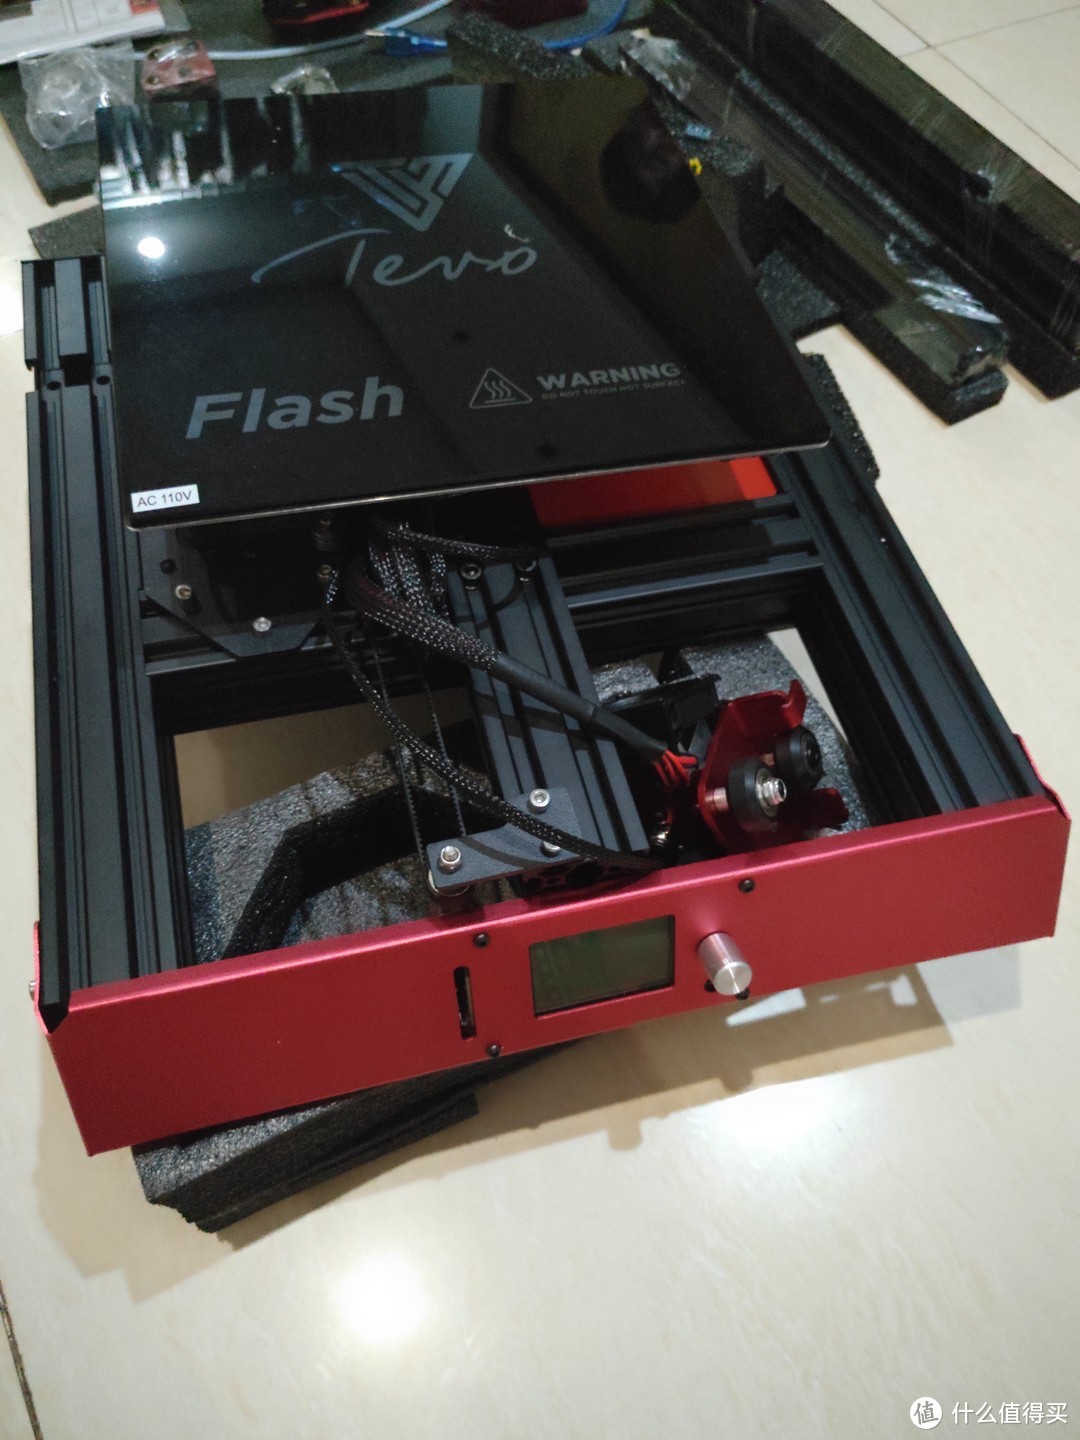 TEVO FLASH 一款国外很火，国内很少听闻的国货3D打印机